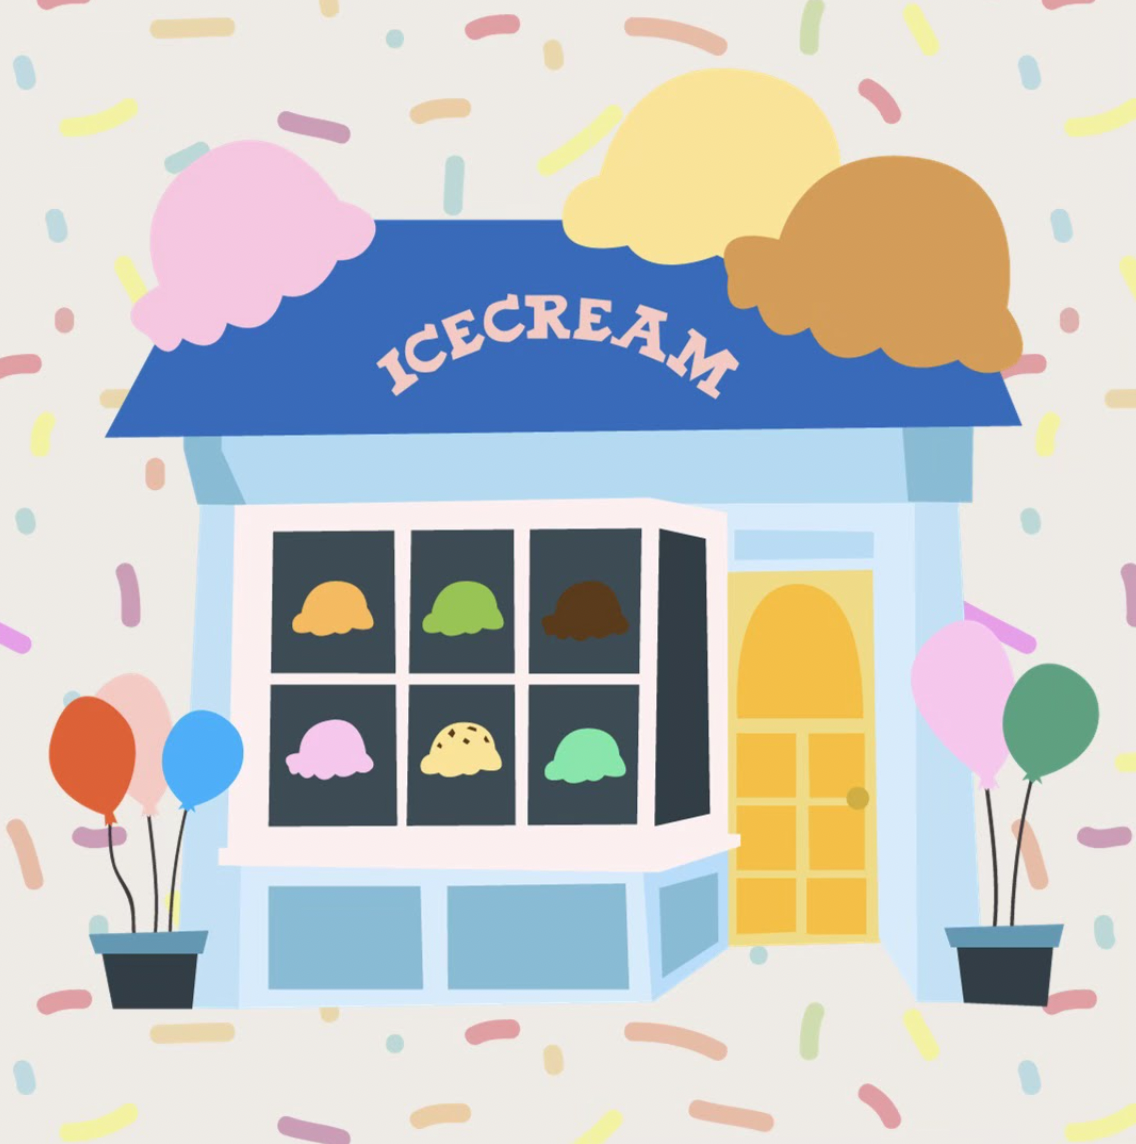 Downtown+Milledgeville+needs+an+ice+cream+shop